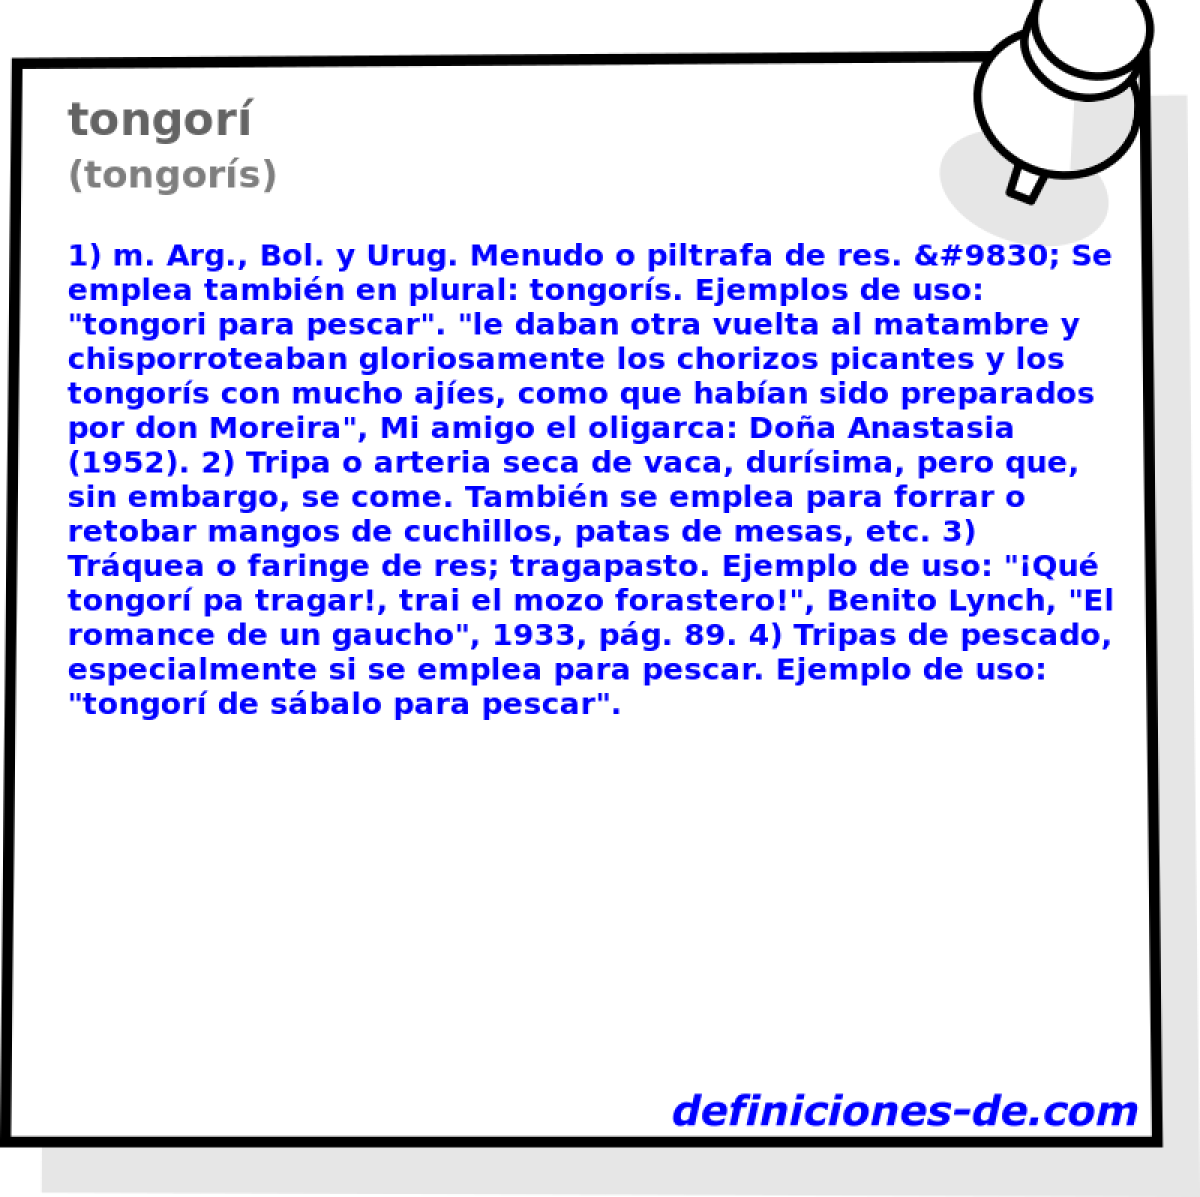 tongor (tongors)